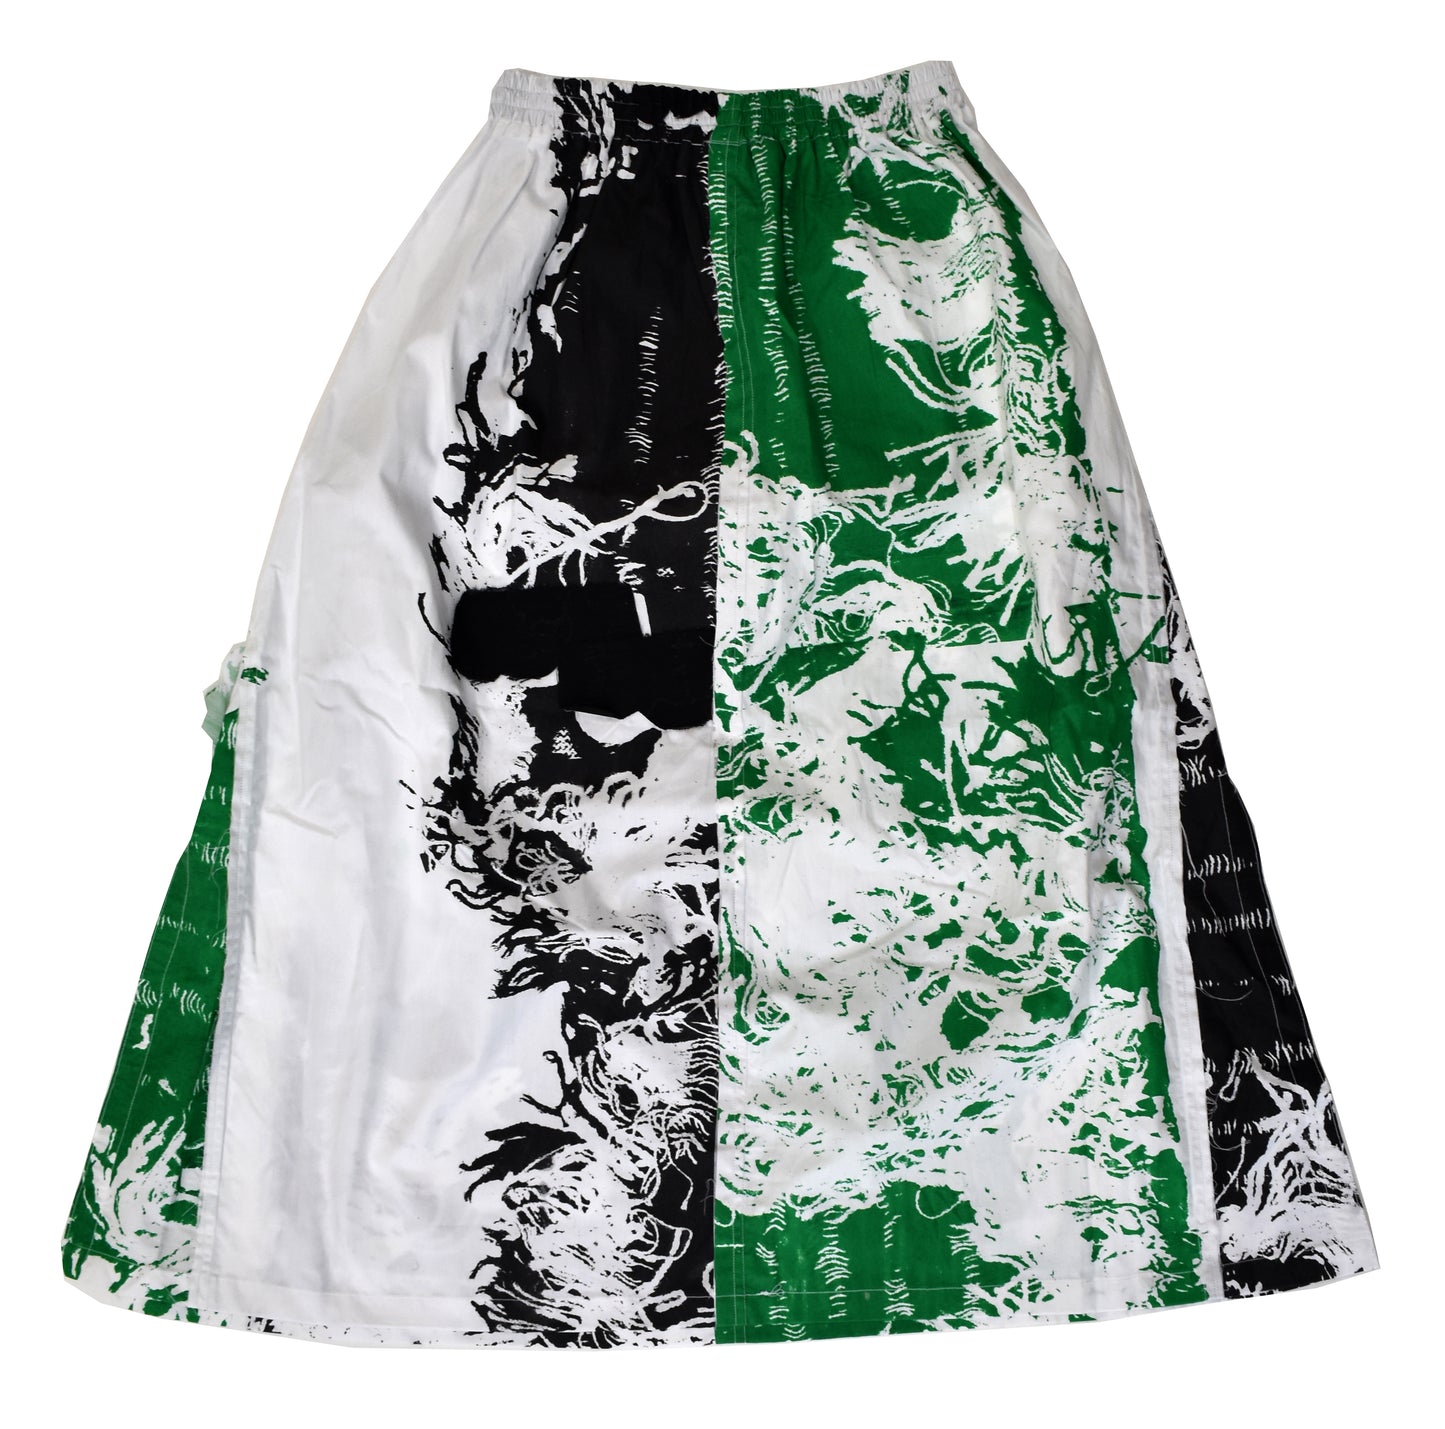 Tangled Yarn Skirt